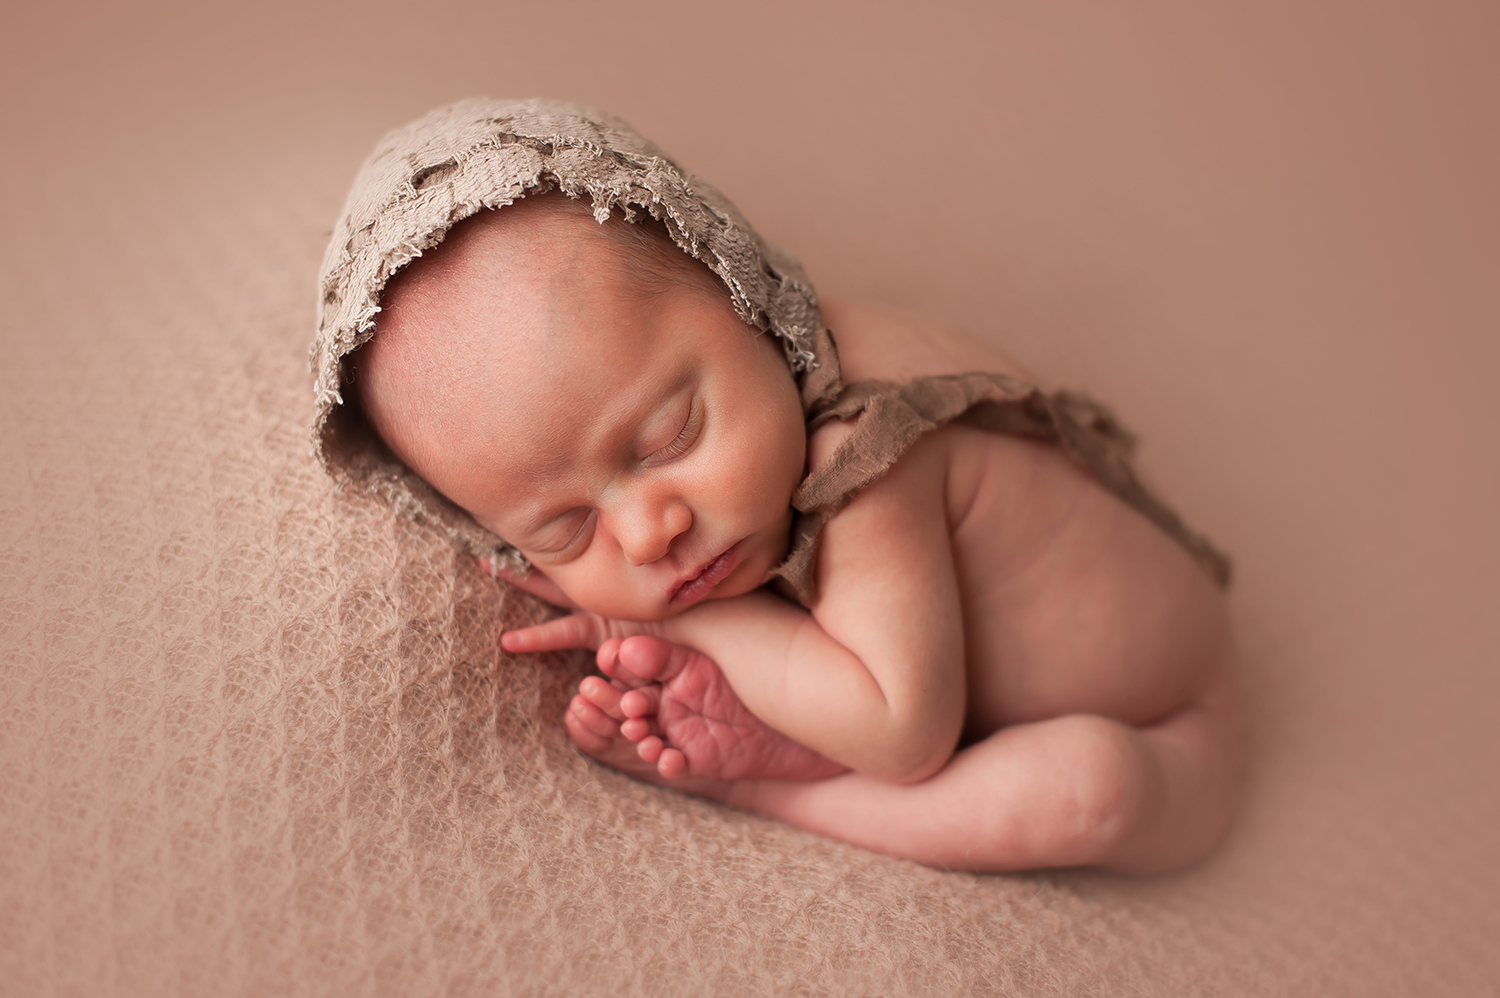 clintonville-ohio-newborn-photographer-bare-baby-photography.jpg